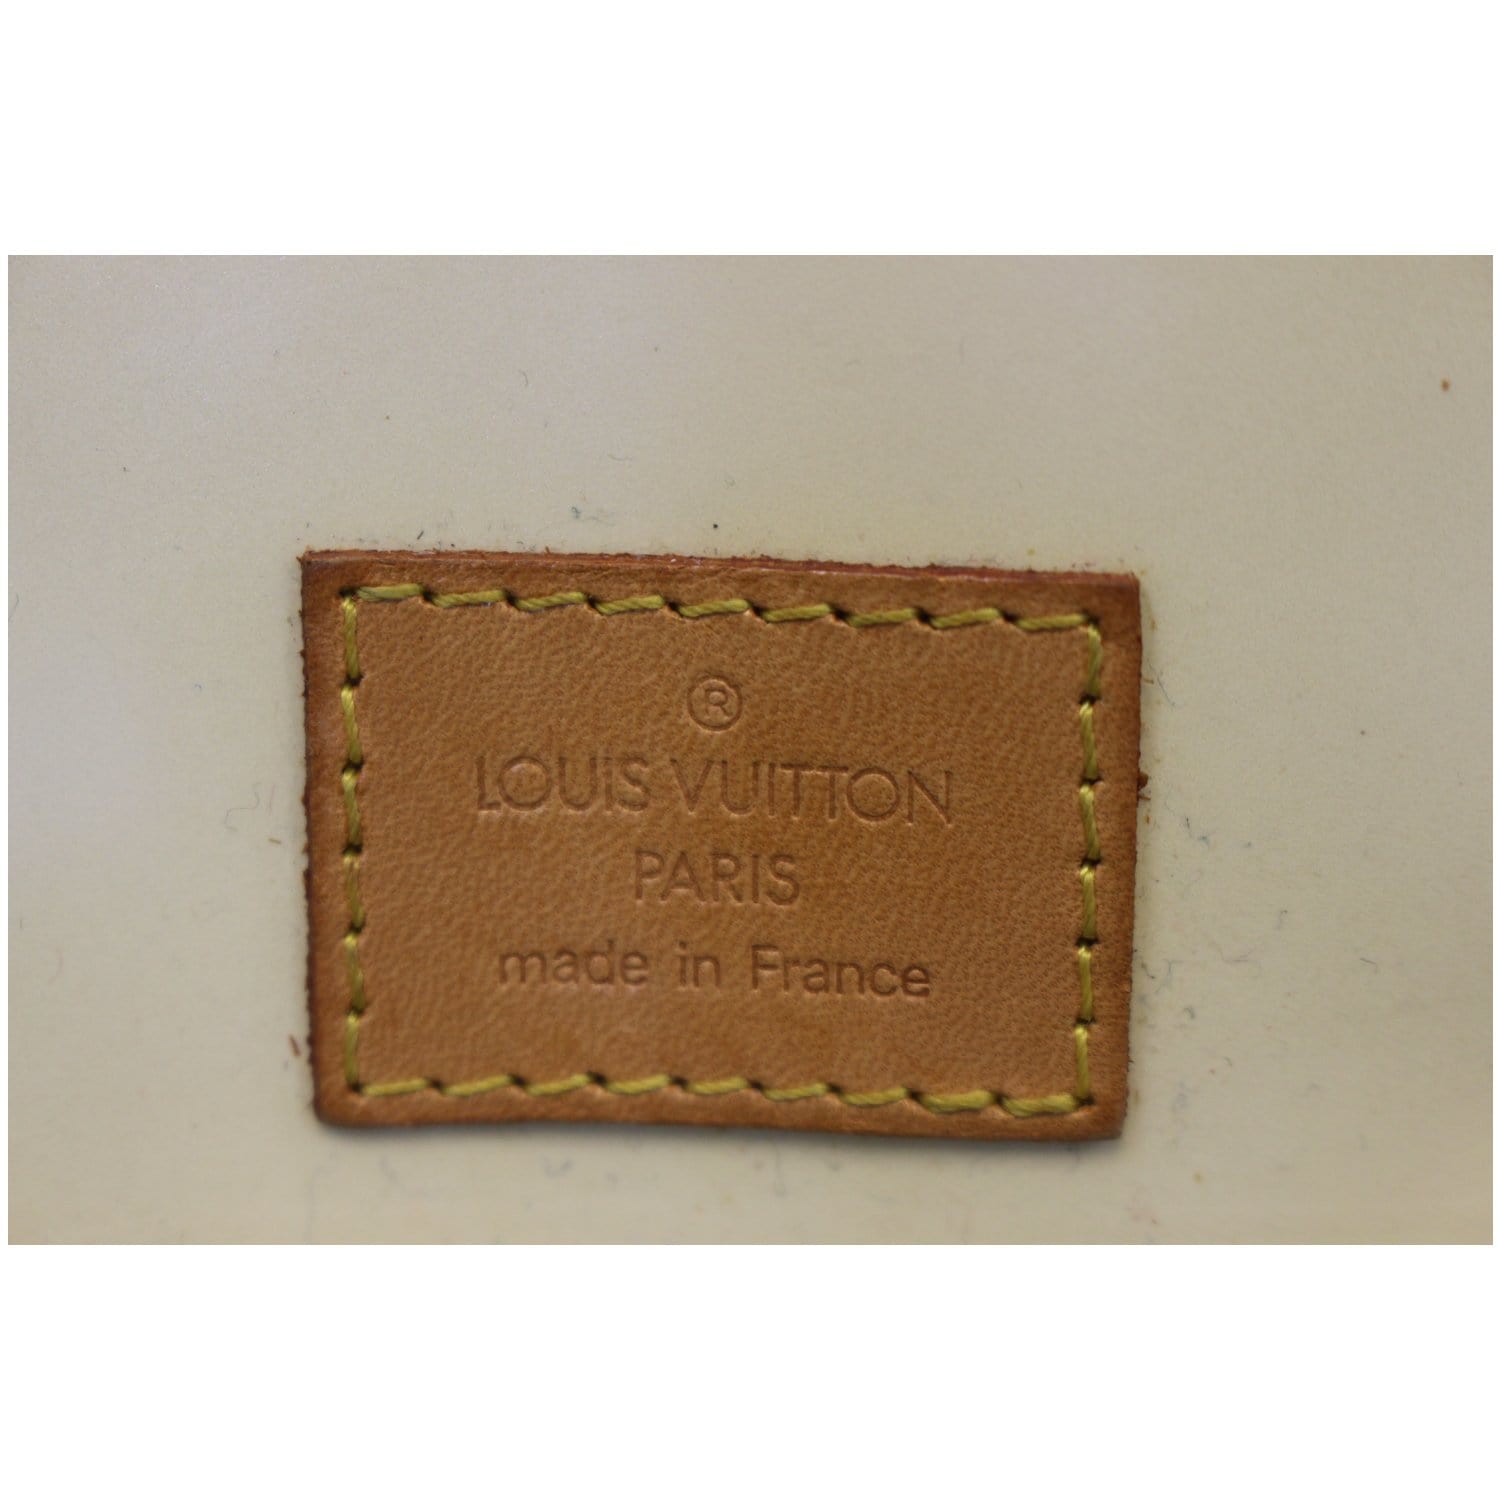 Authentic Louis Vuitton Vernis Reade PM Hand Bag Ivory White M91336 LV 3925G